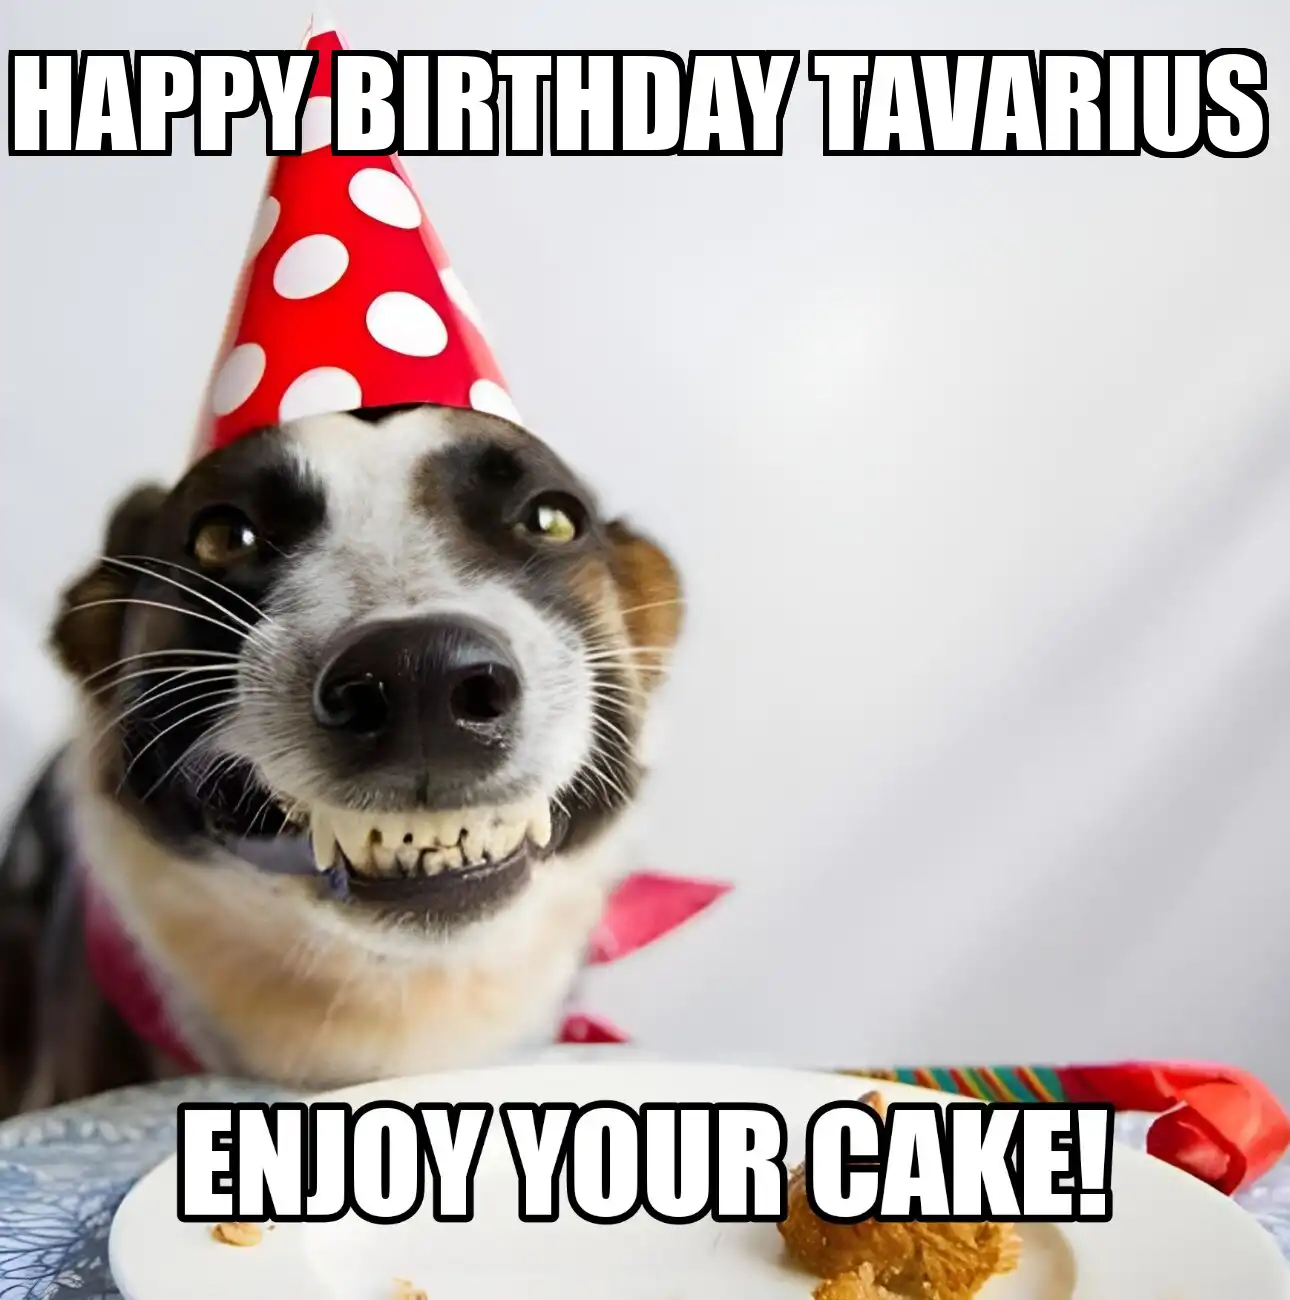 Happy Birthday Tavarius Enjoy Your Cake Dog Meme